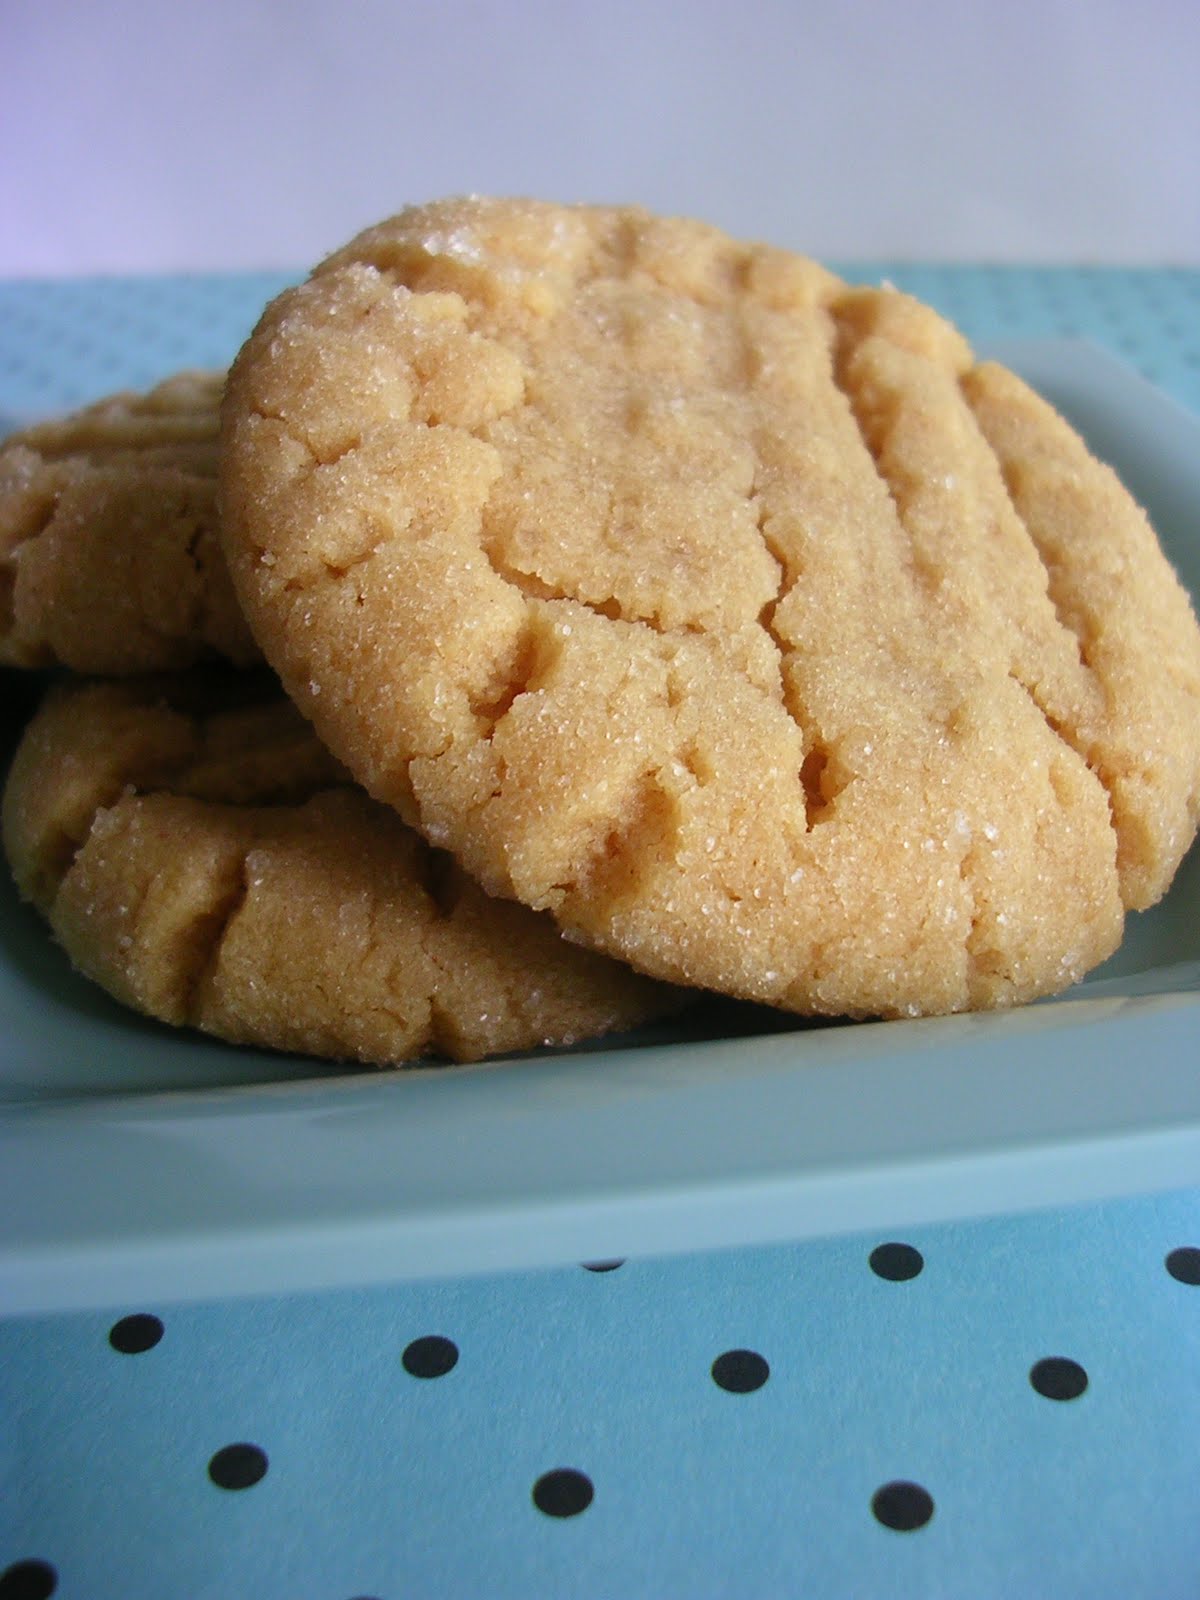 The Busty Baker: Mini Throwdown: Peanut Butter Cookies (Part 2)